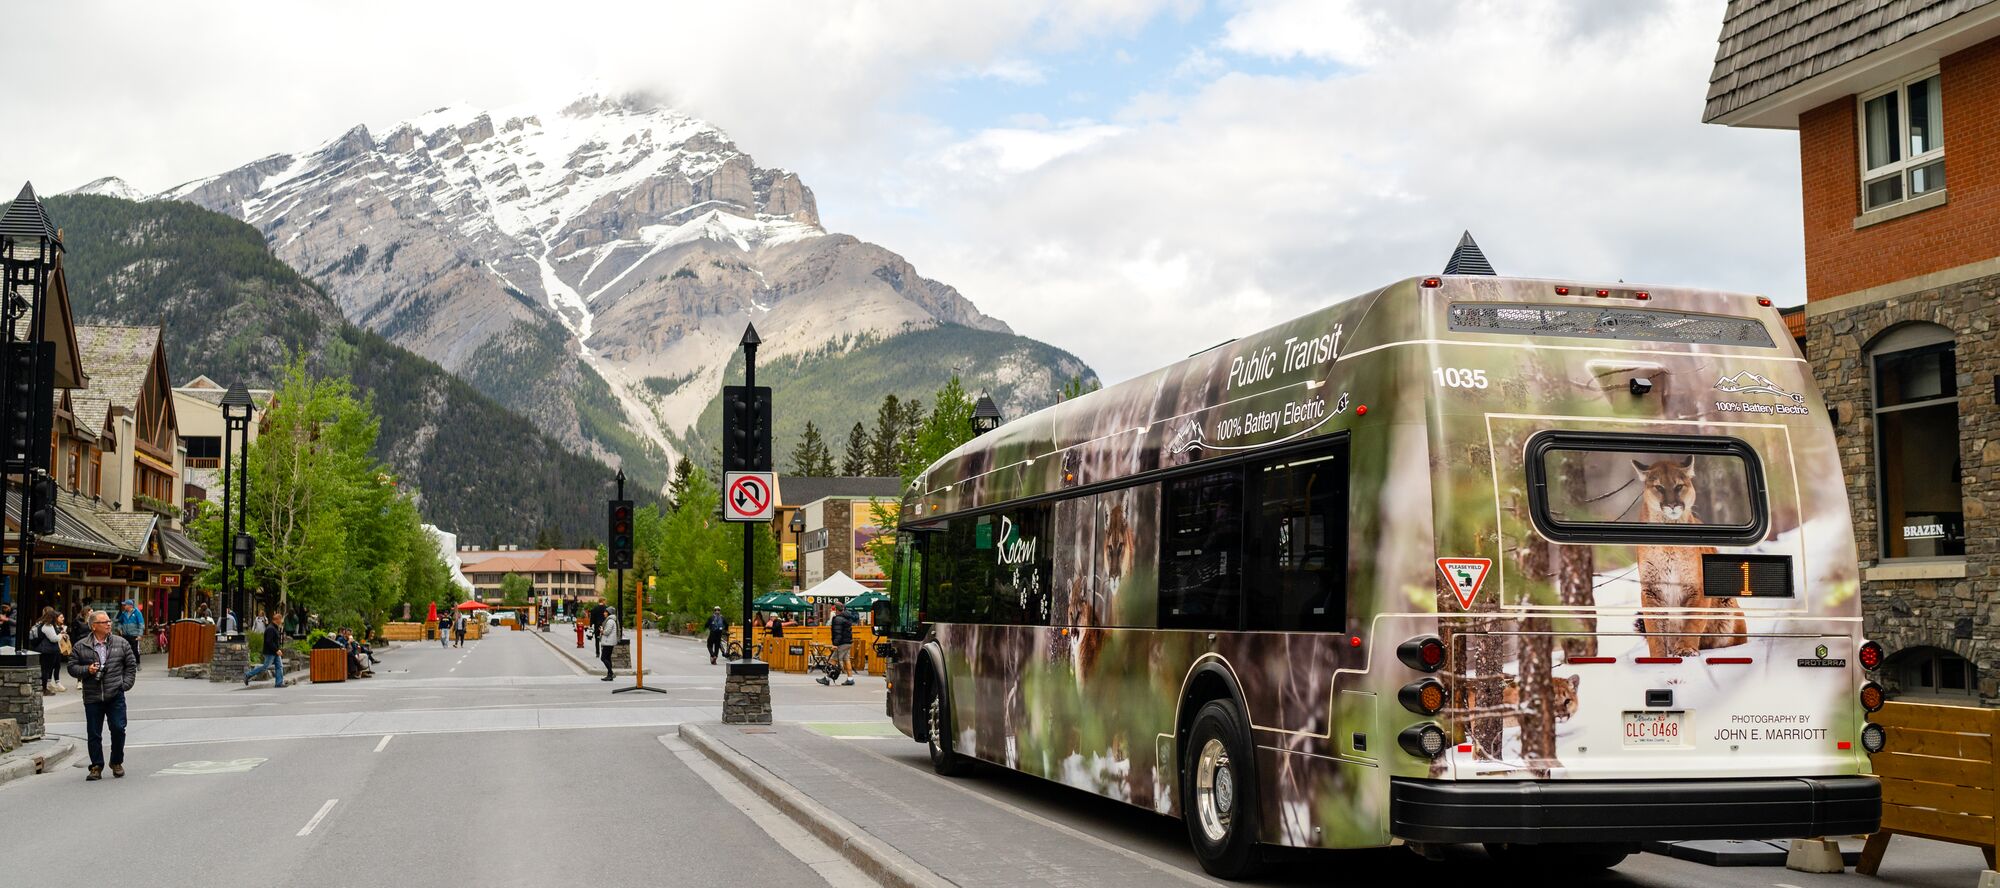 A Roam Transit public transportation bus travels down Banff Avenue